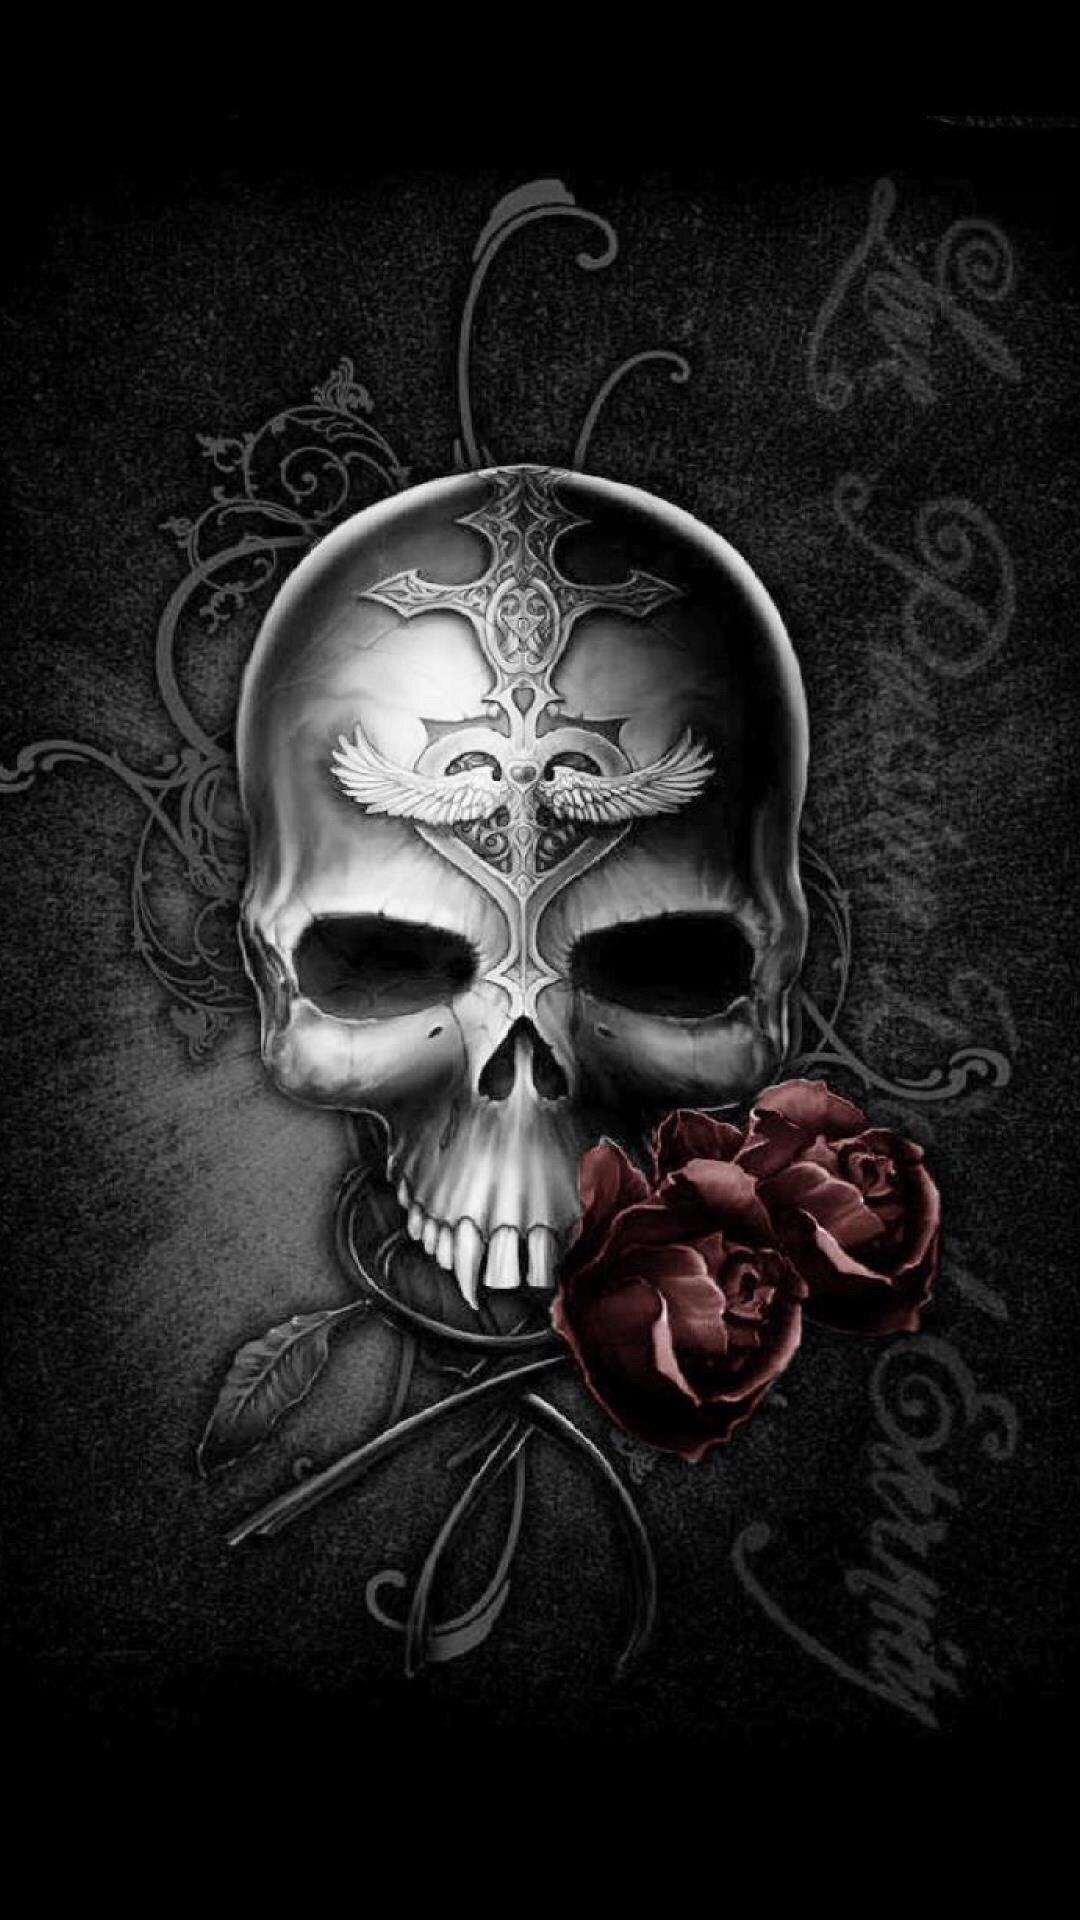 1080x1920 Free Skull Wallpapers Best Of Punisher Skull Wallpaper For Android Impremedia 1080x1920